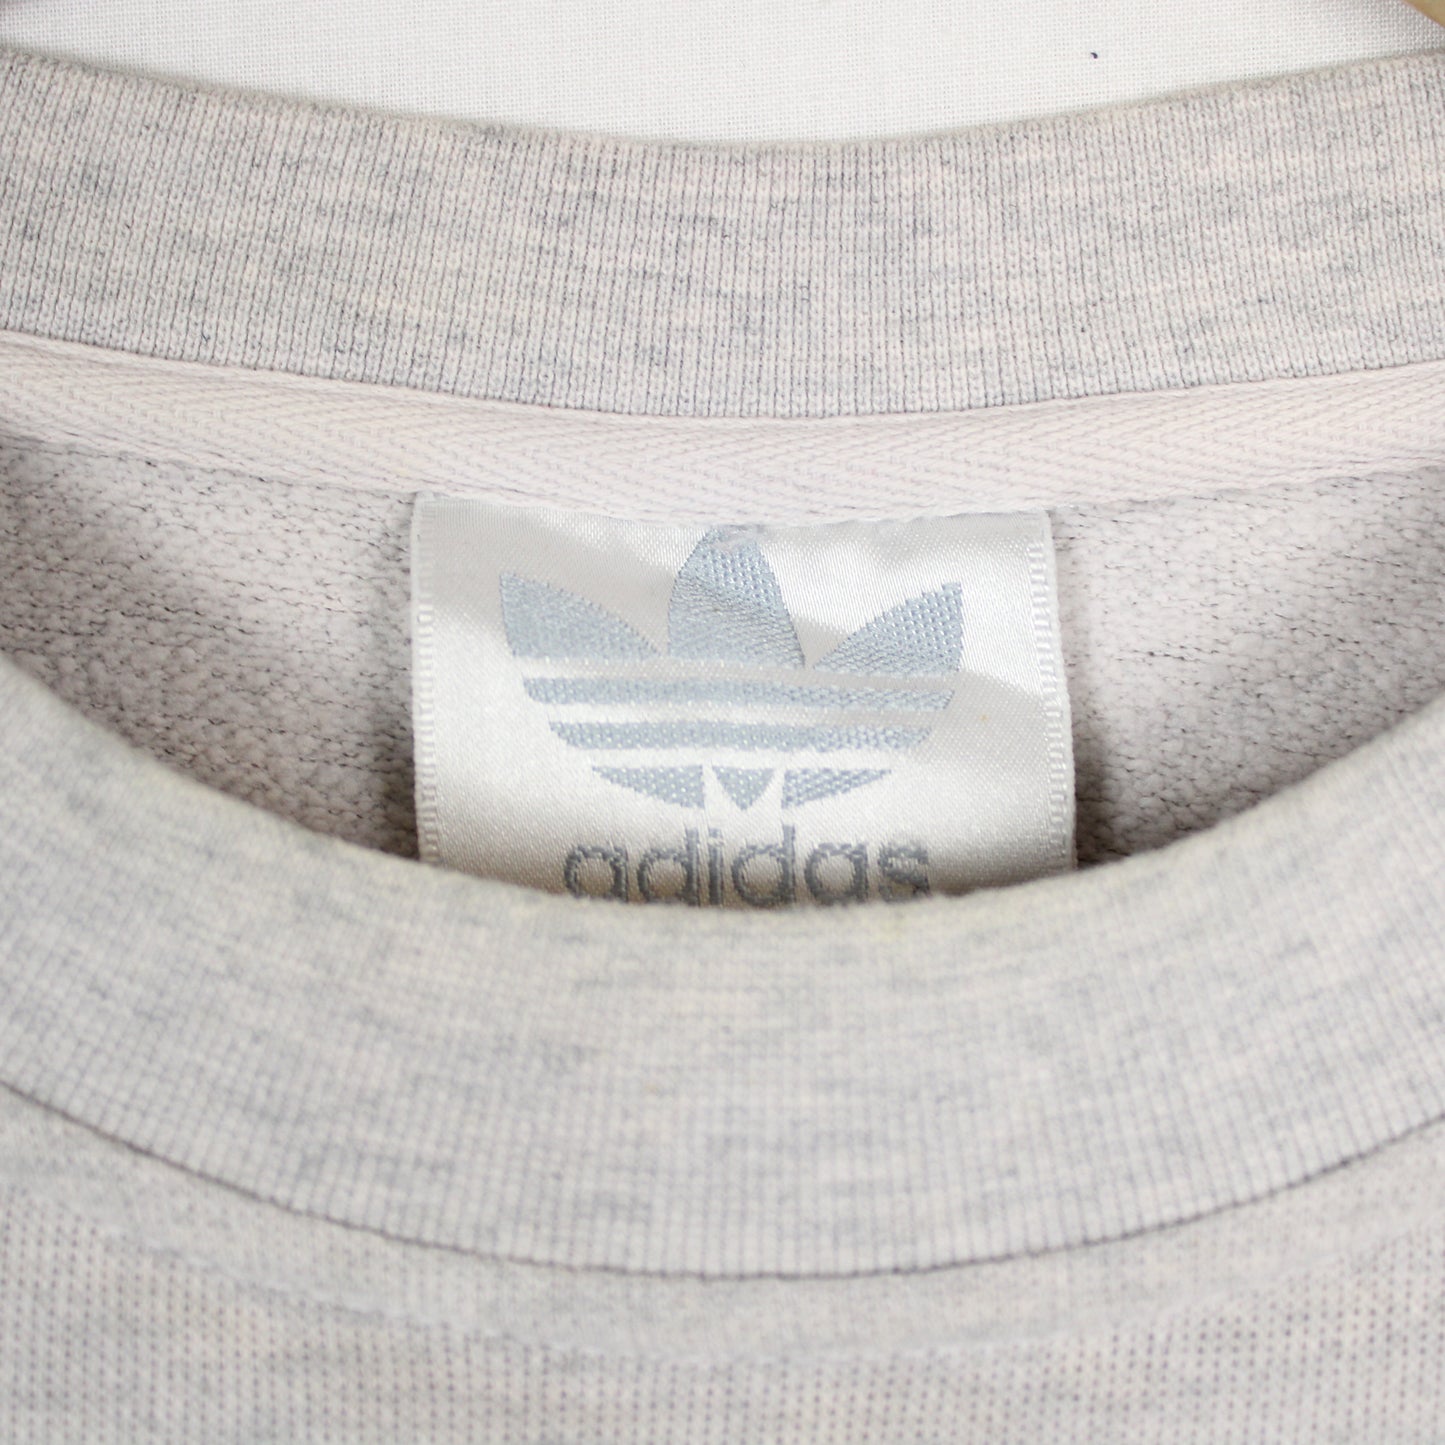 Vintage Adidas 3D Trefoil Sweatshirt - M/L